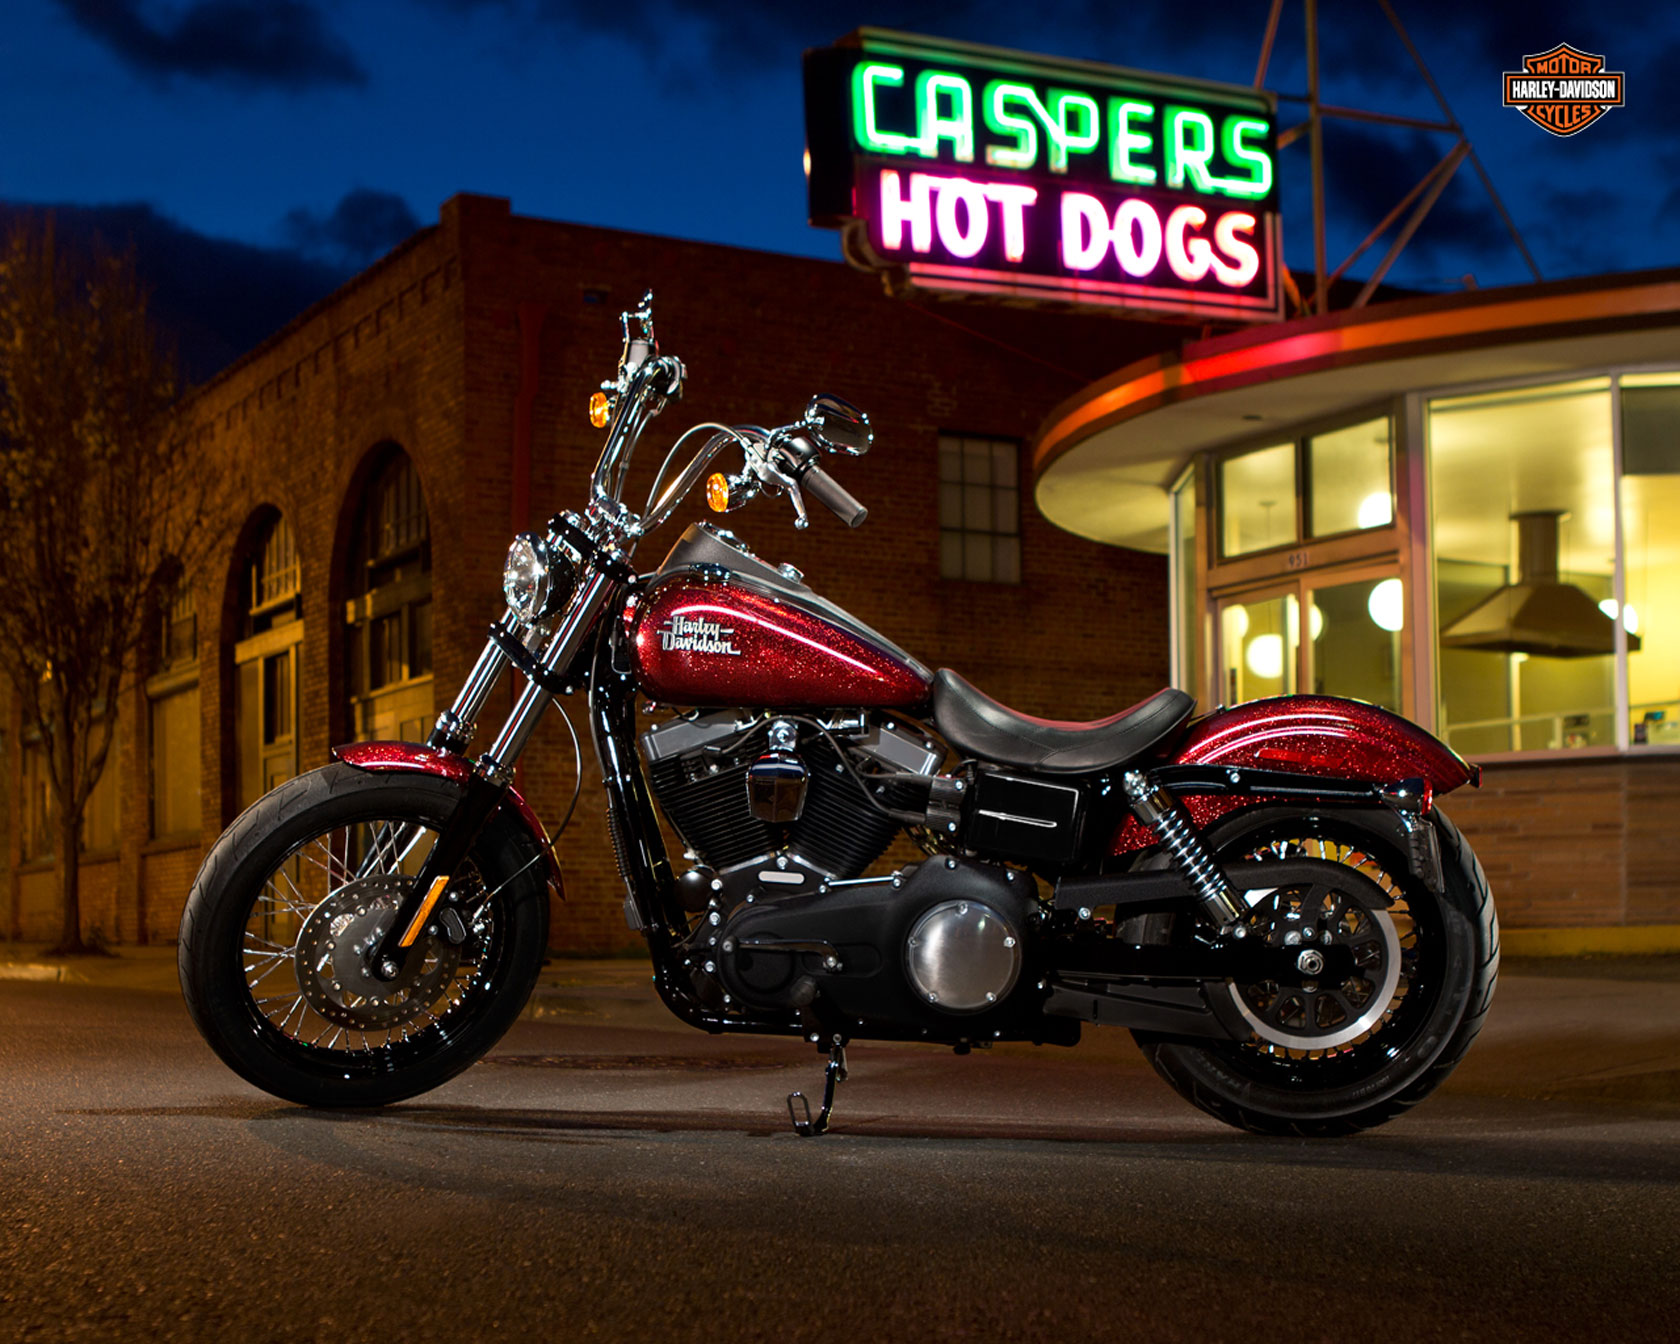 2013 Harley Davidson Fxdb Dyna Street Bob Review